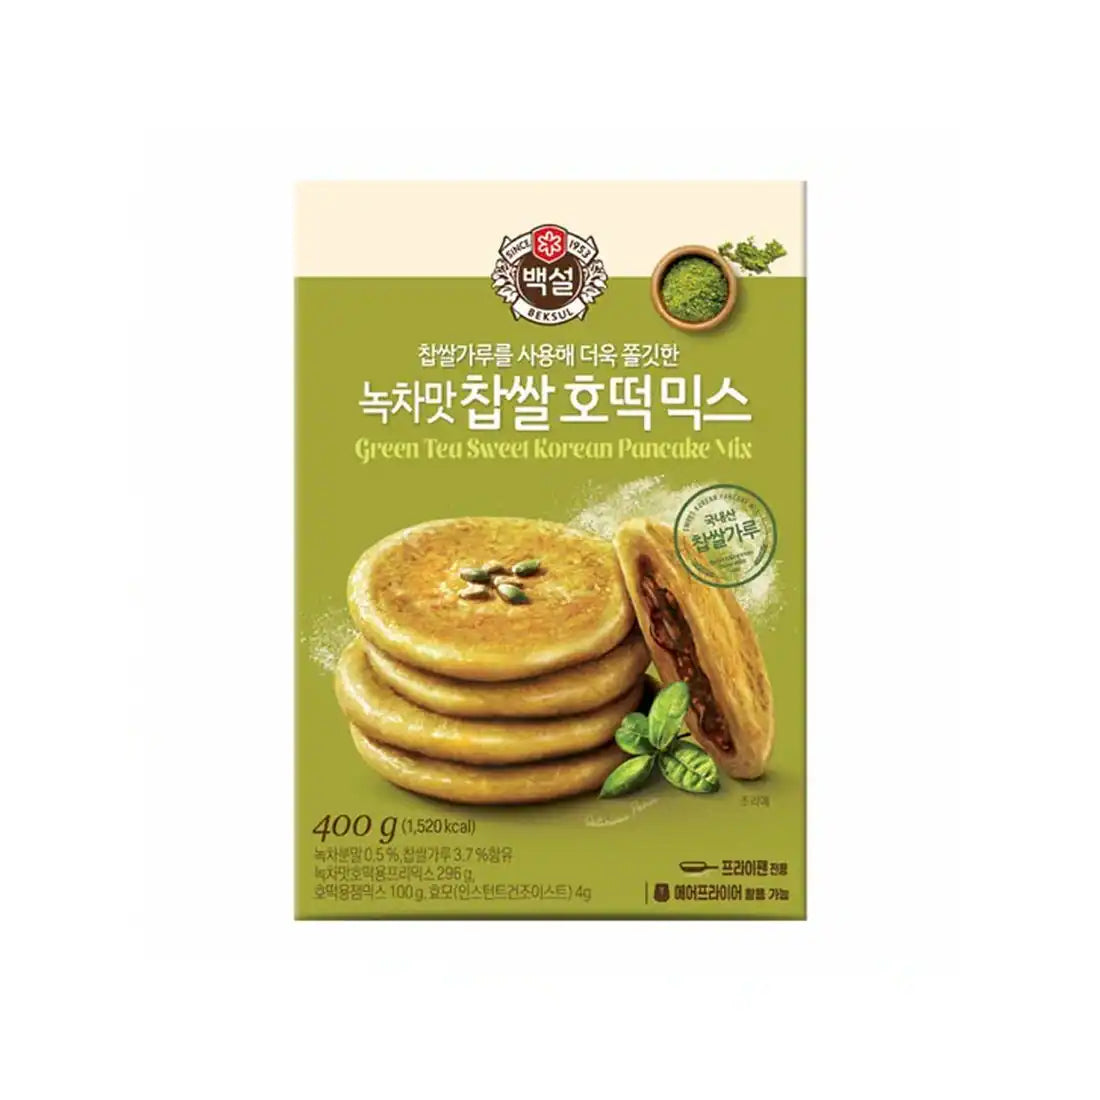 Green tea pancake stuffed 녹차맛 찹쌀 호떡믹스